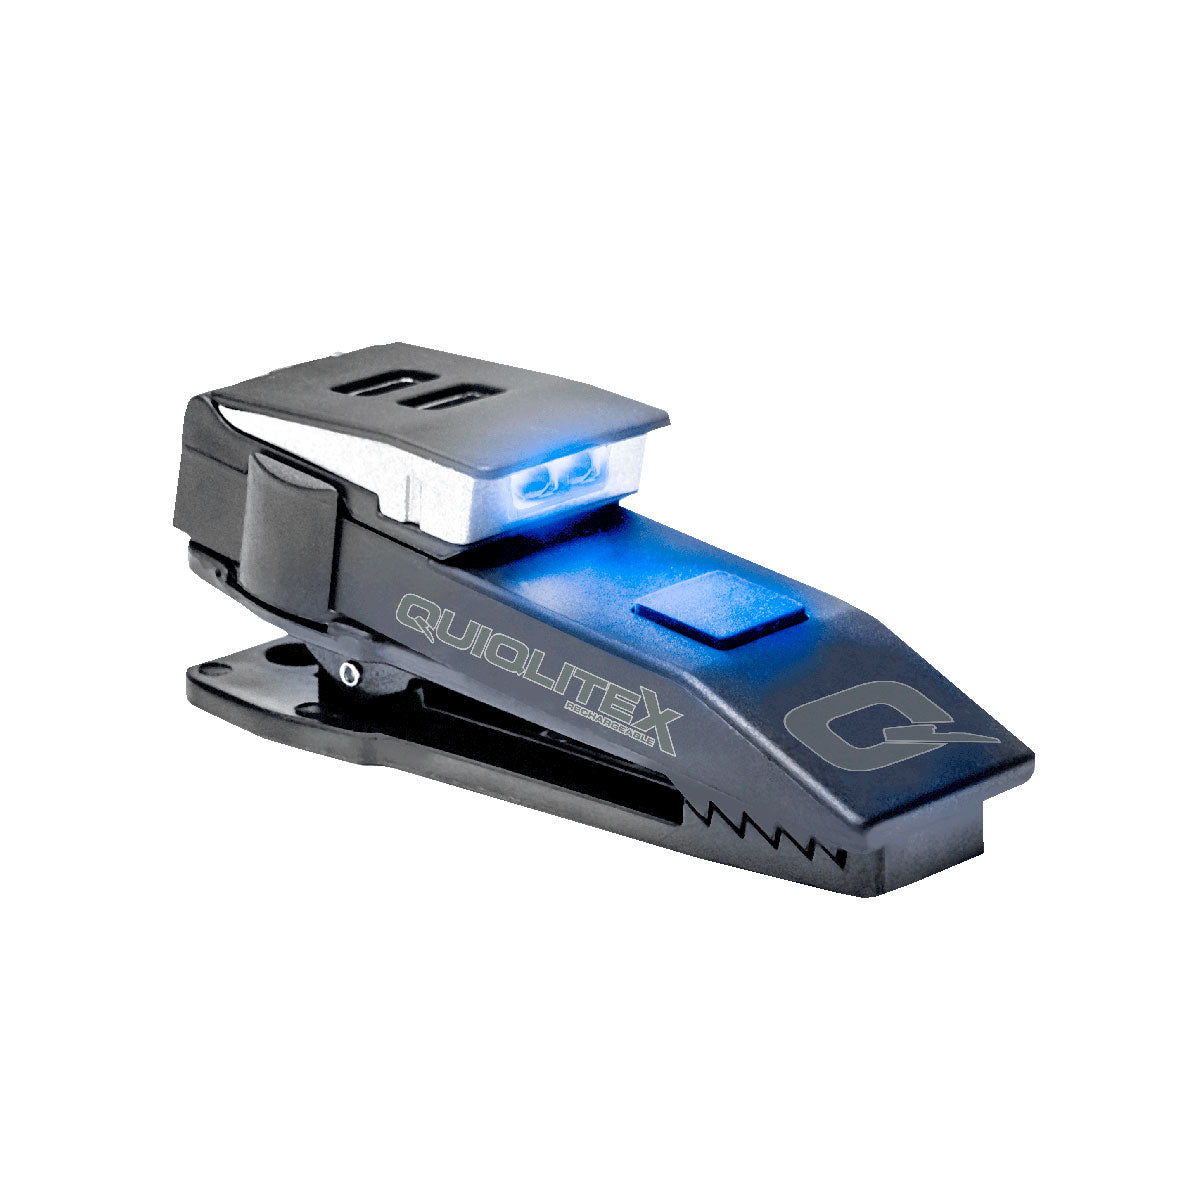 QuiqLite X USB Rechargeable Handsfree Dual LED Lighting - Blue/White Tactical Gear Australia Supplier Distributor Dealer